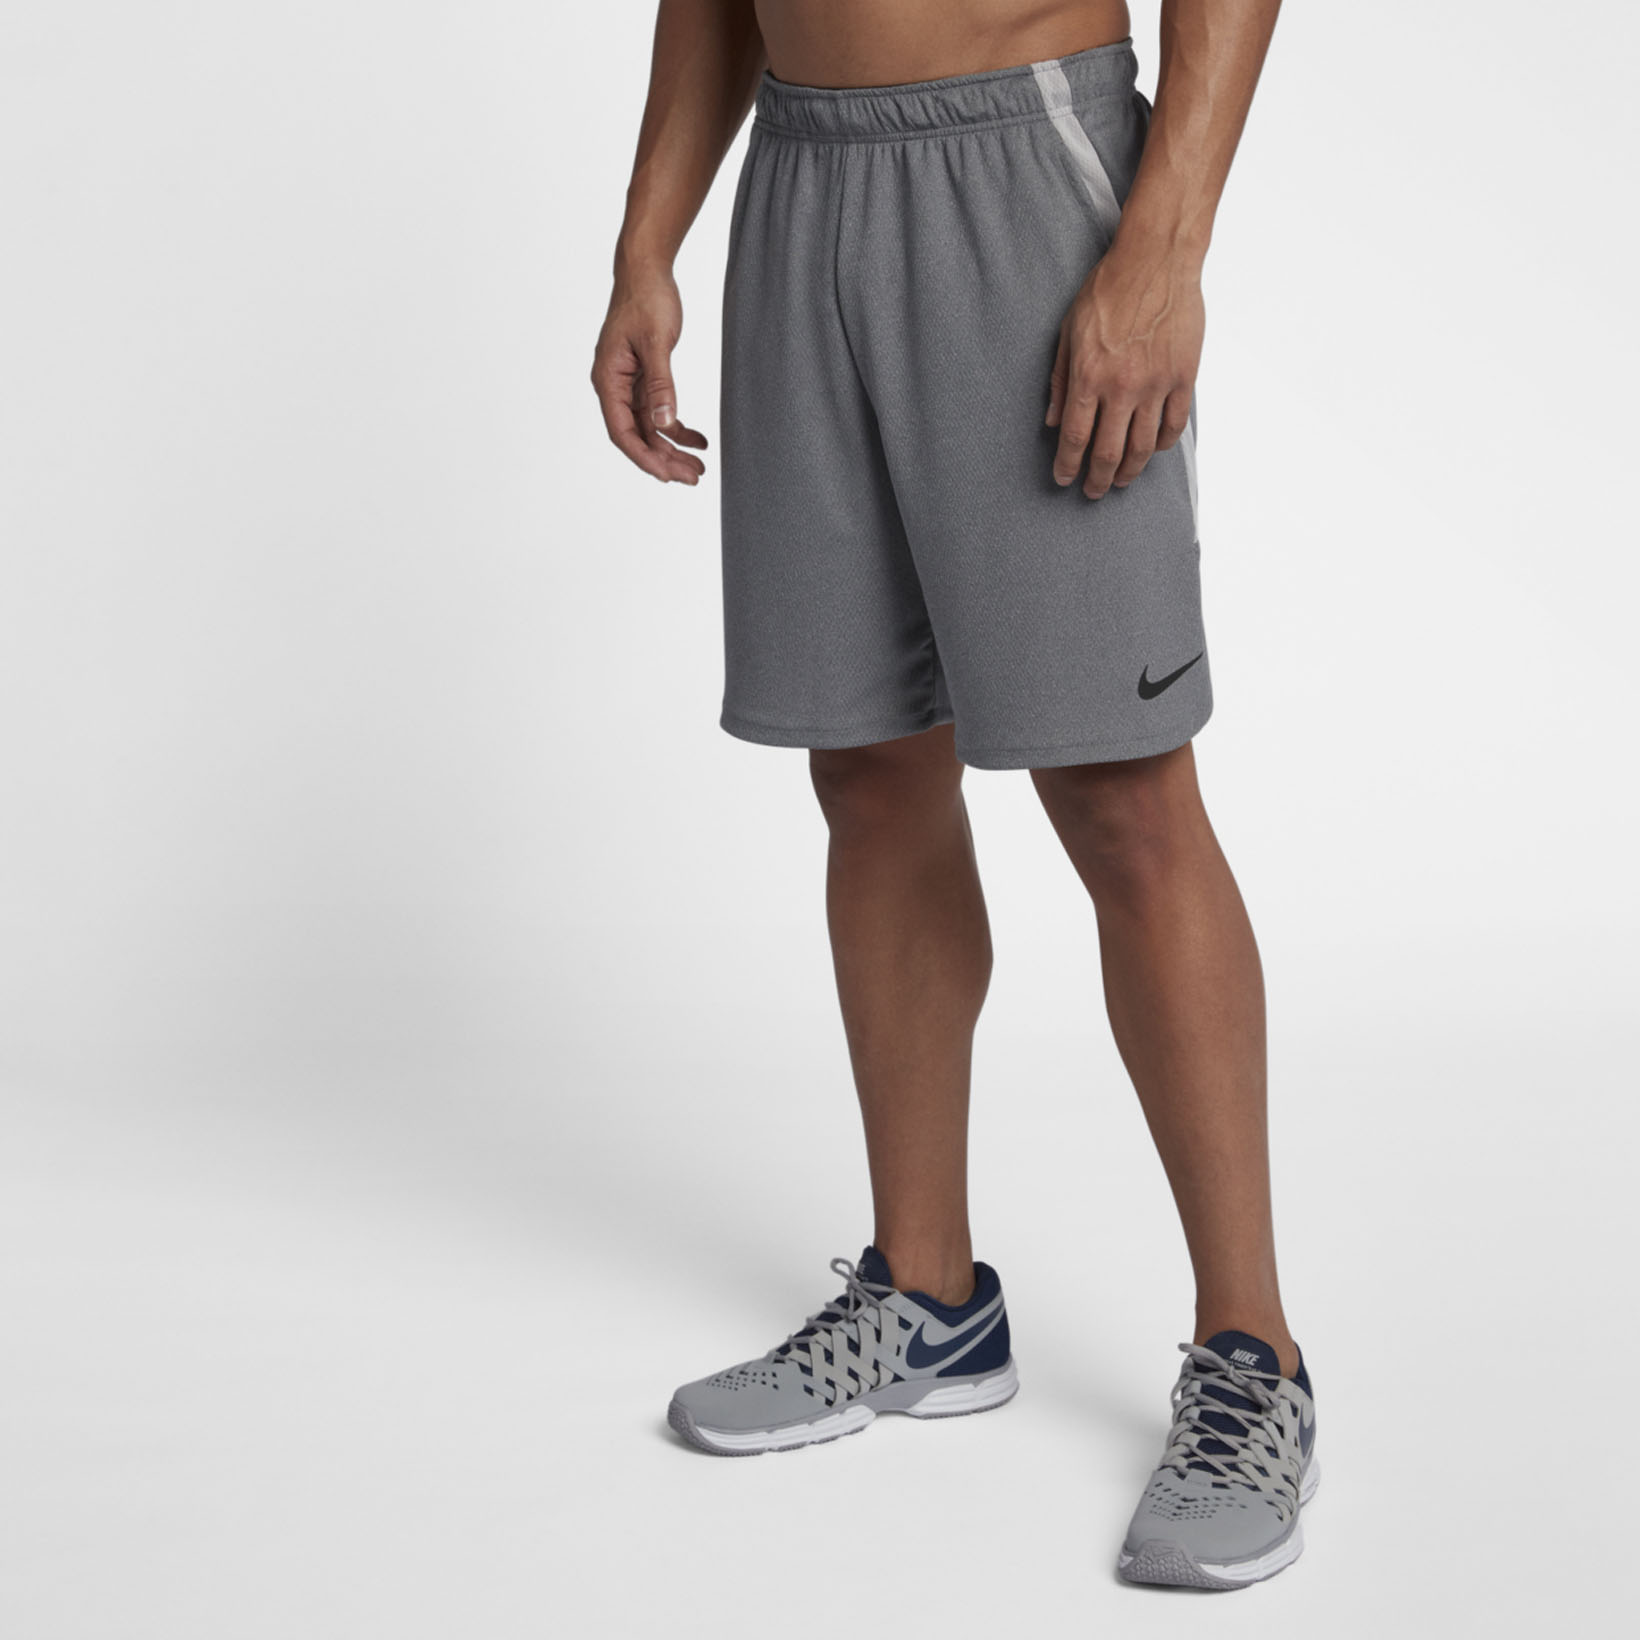 Мужские шорты Nike Dry Short 4.0 890811-036